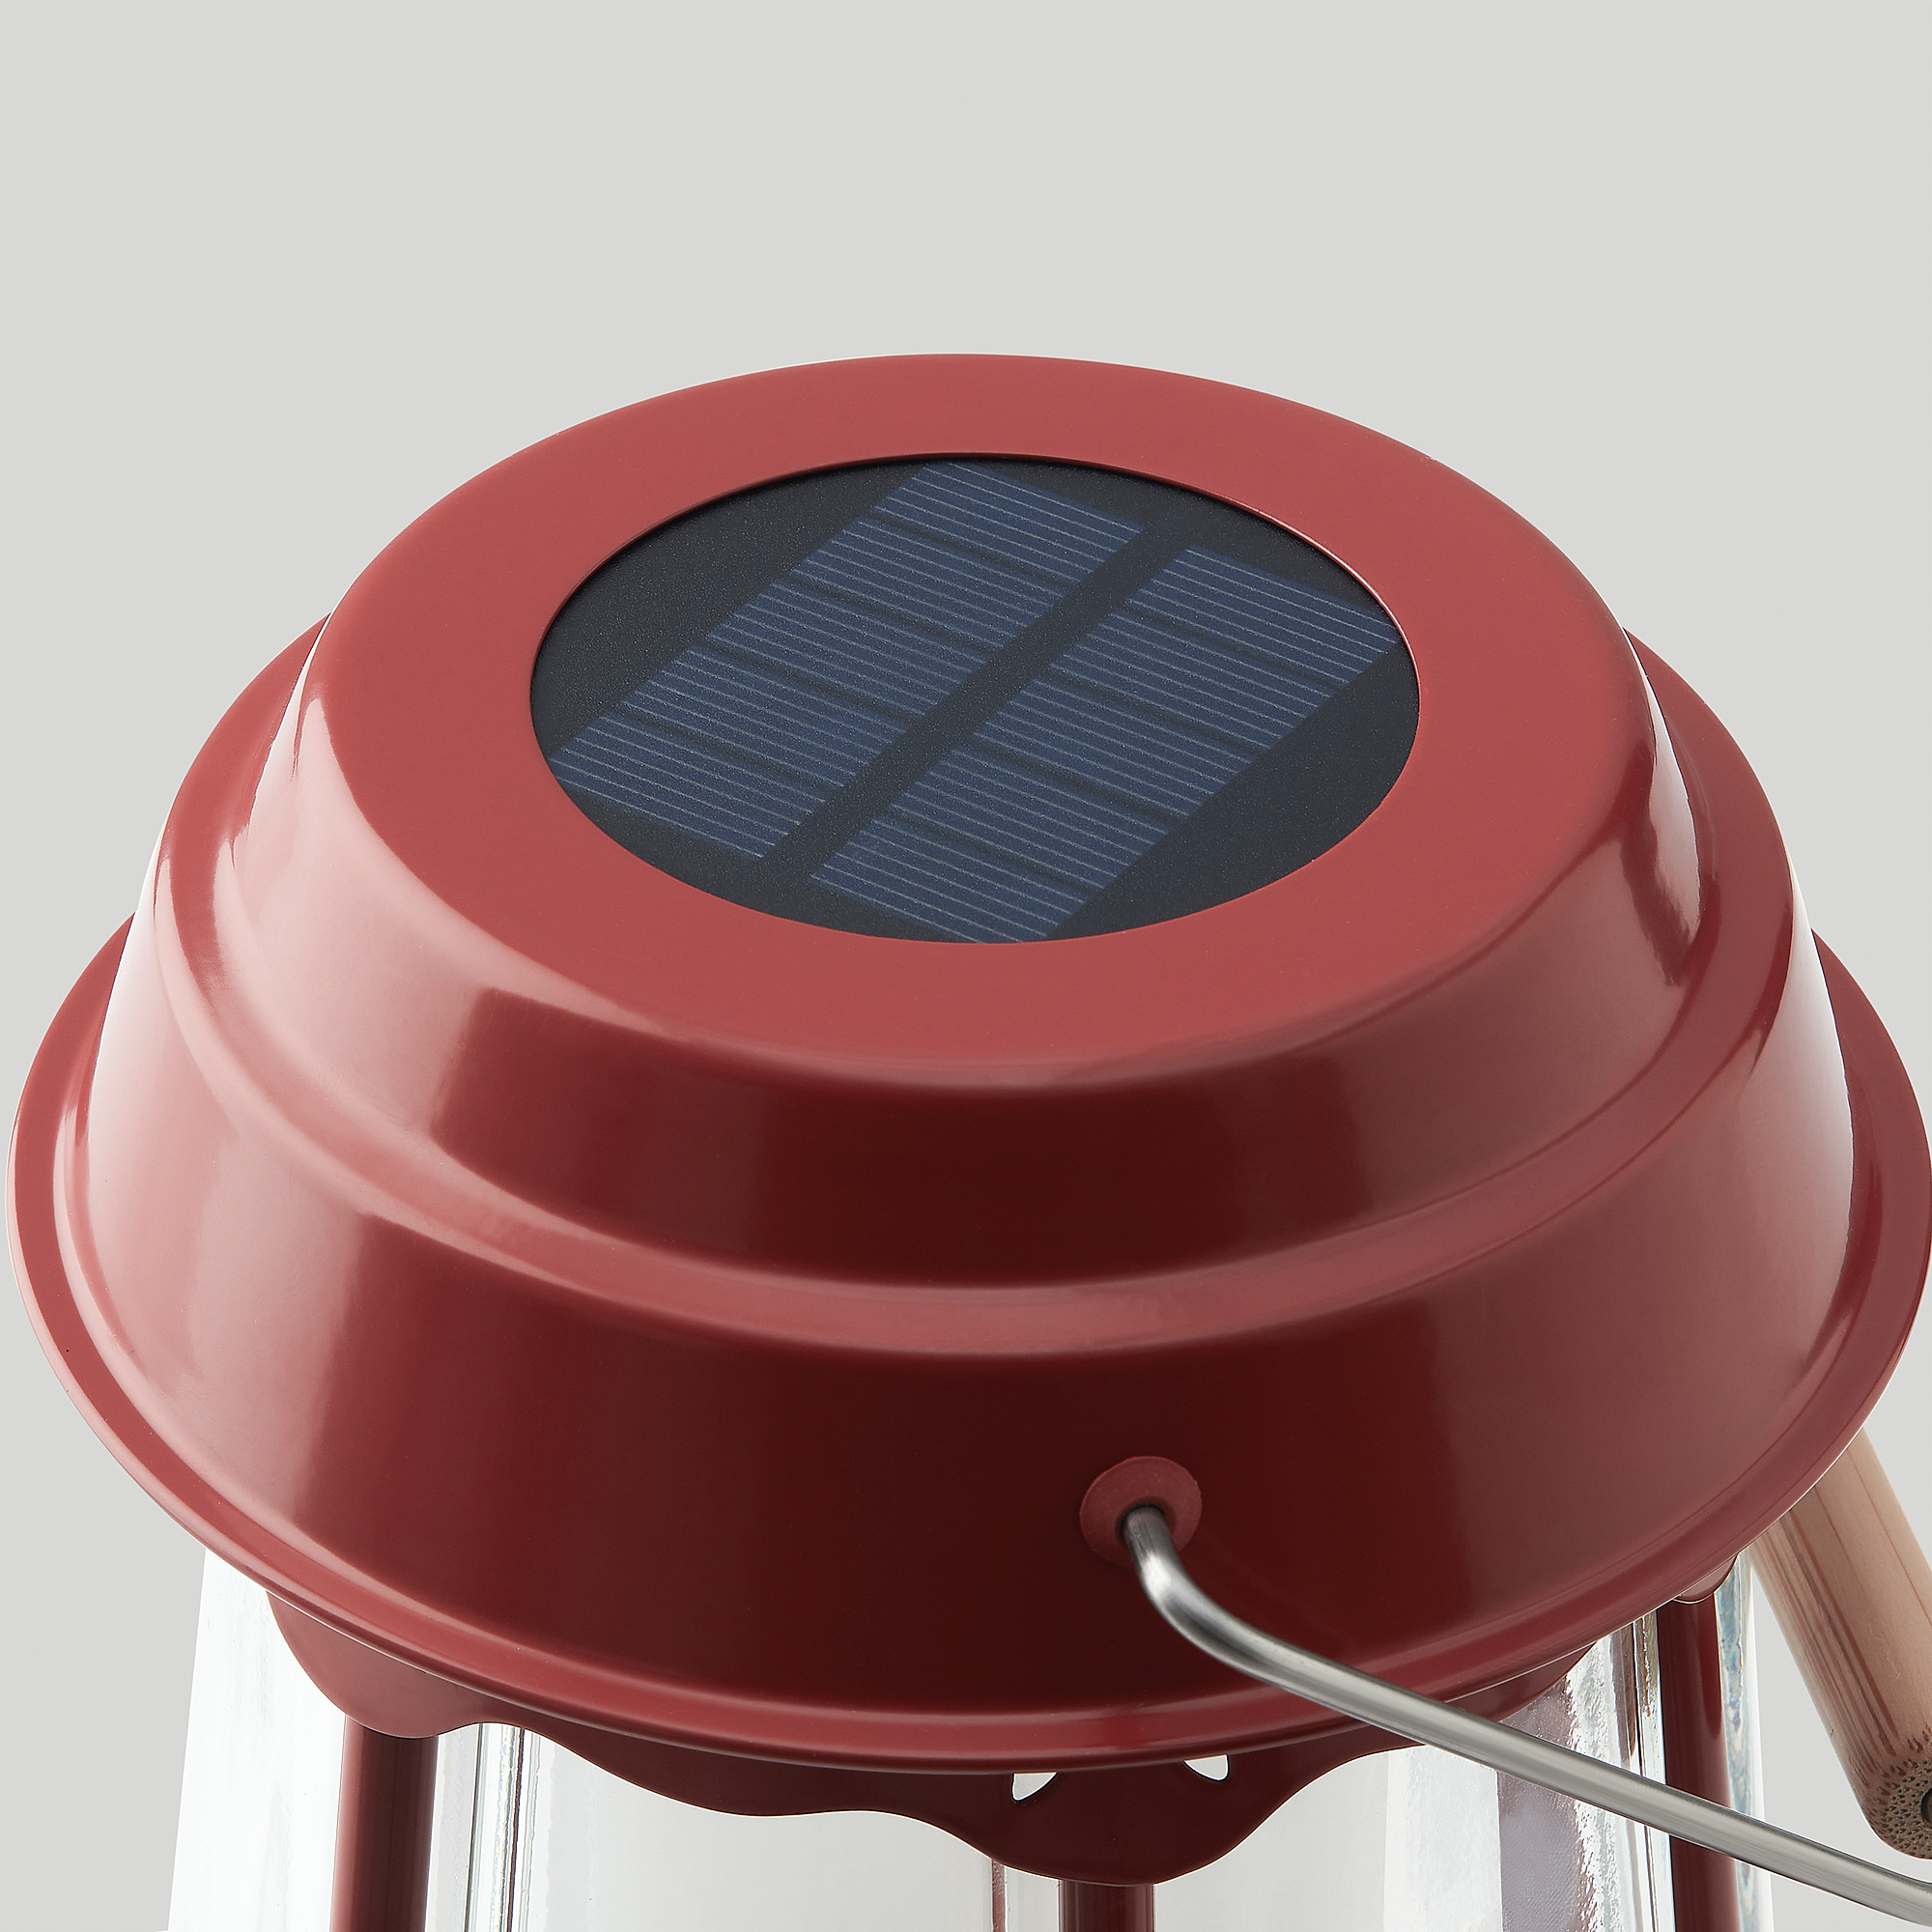 SOLVINDEN LED solar-powered table lamp